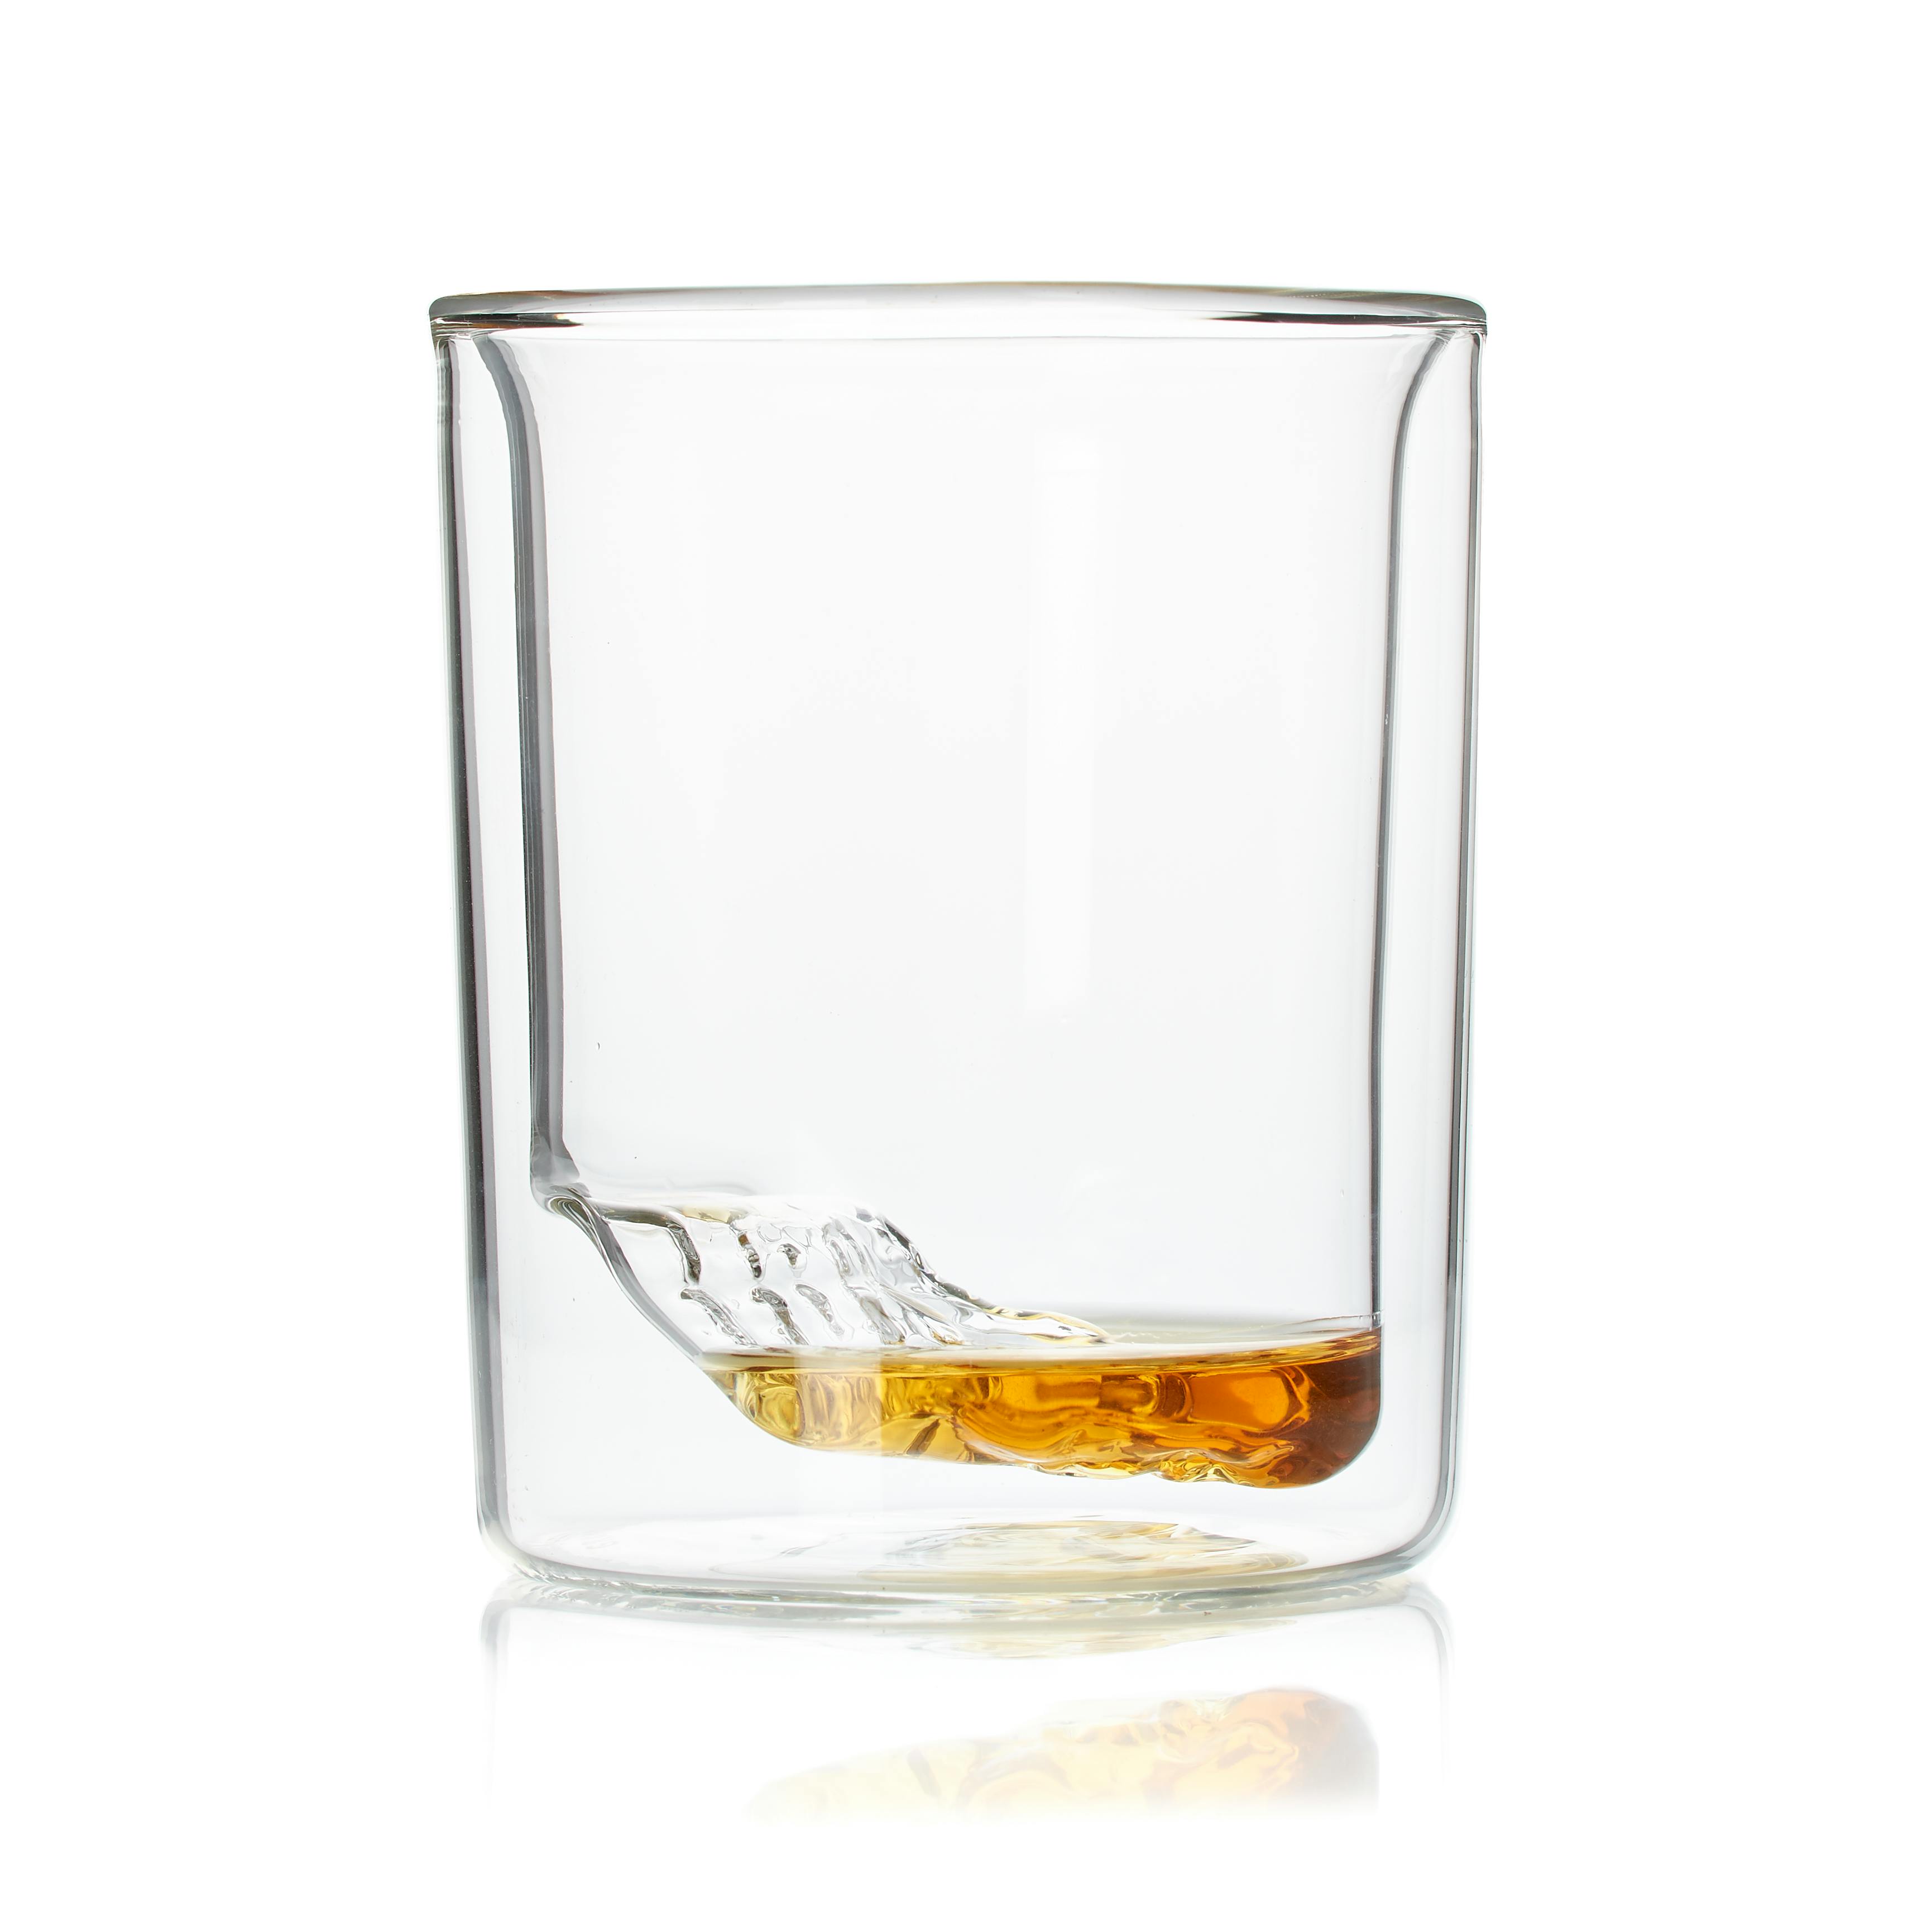 Liiton Grand Canyon Whiskey Glasses - Set of 4